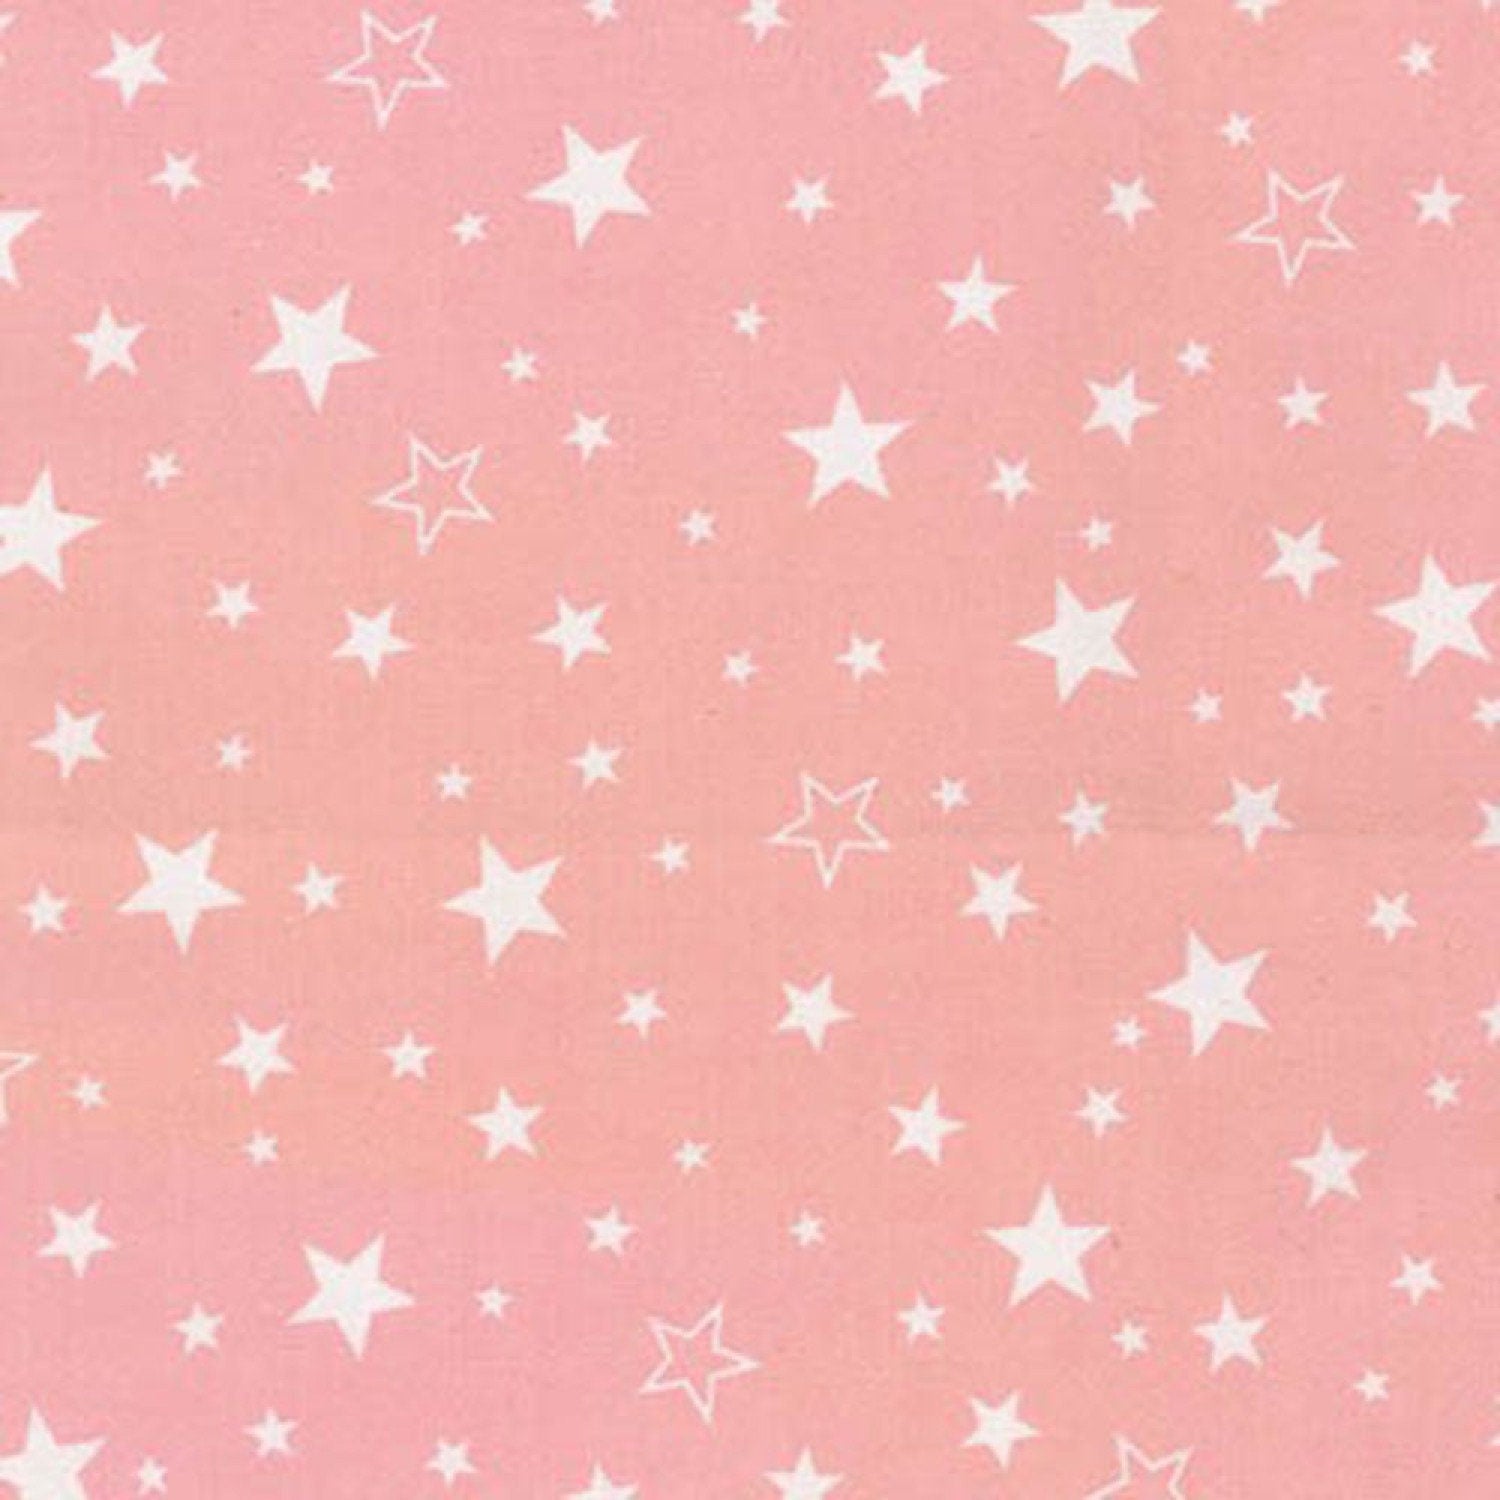 Robert Kaufman Fabric 2 yards (72"x44") / Pink Stars Cozy Cotton FLANNEL by Robert Kaufman Pink Stars or Navy Stars, Celestial Flannel